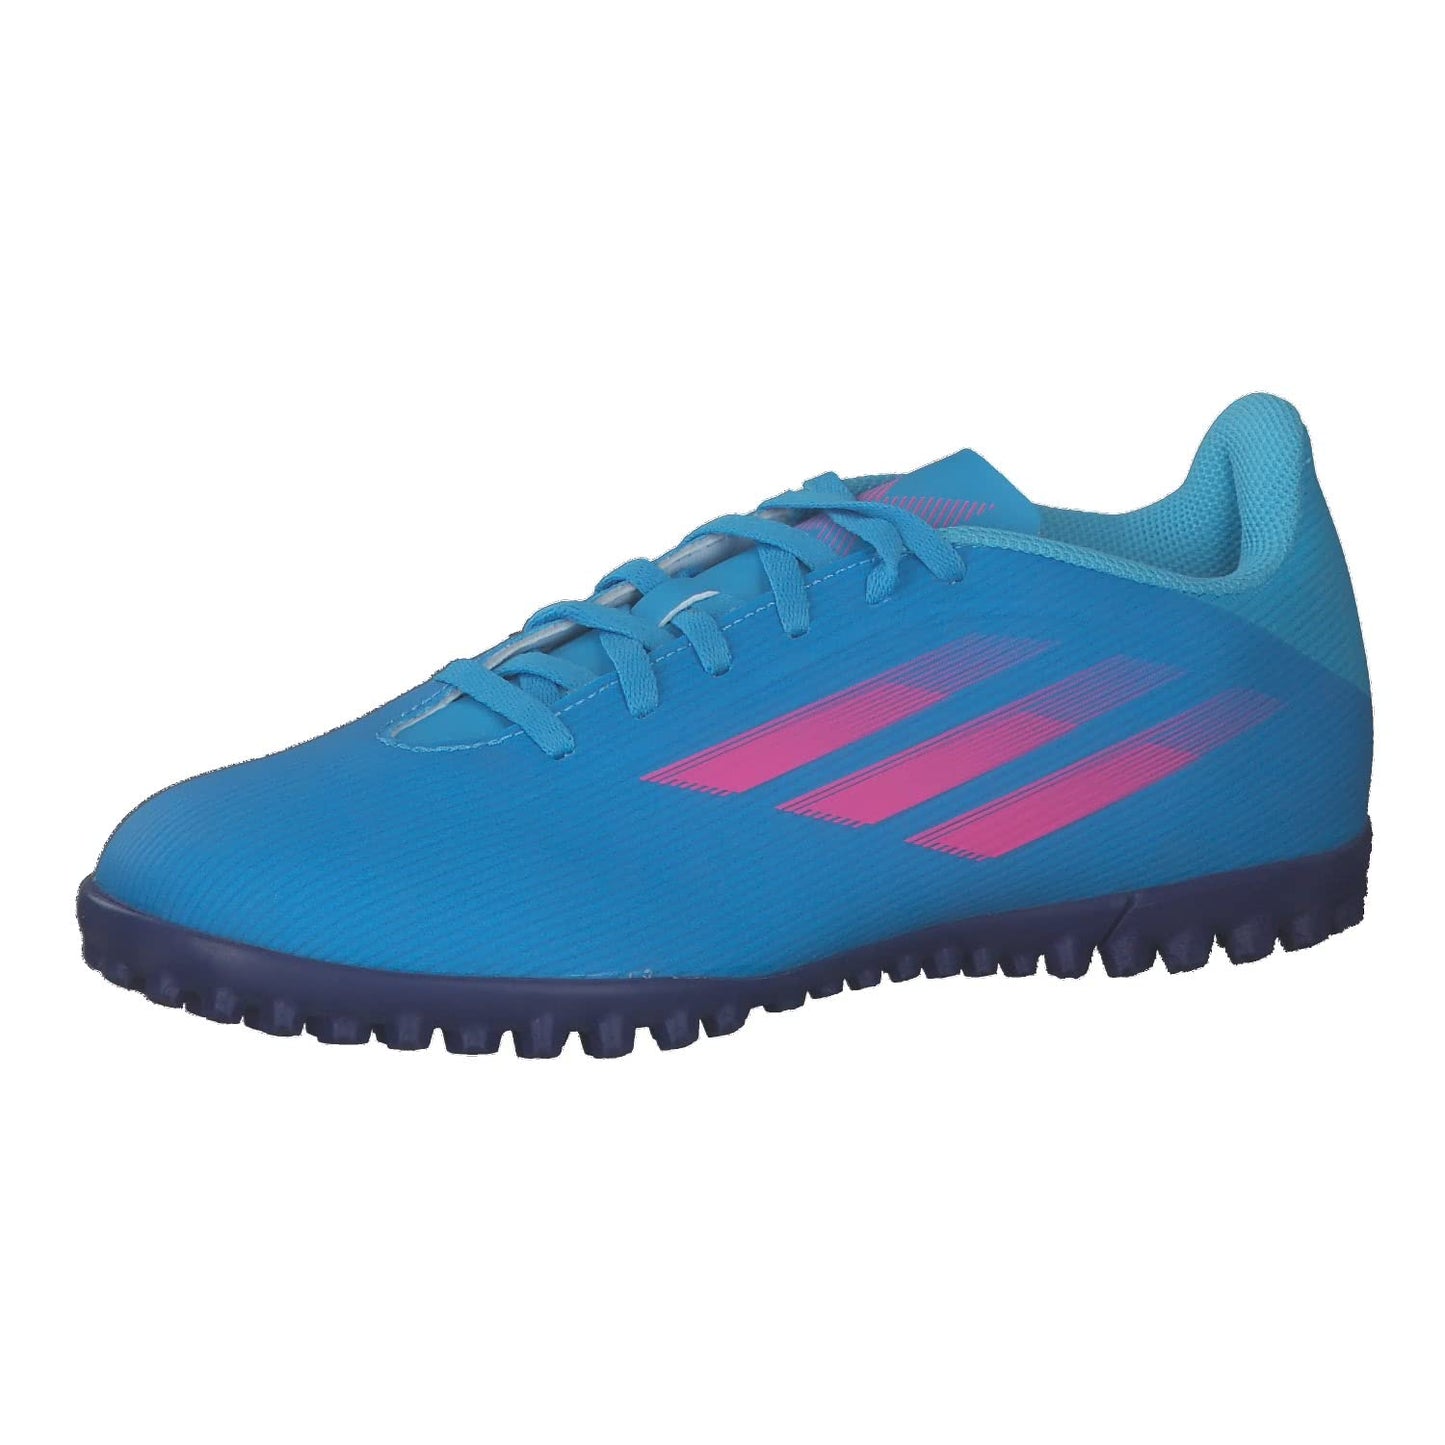 Adidas X Speedflow.4 TF Football Shoes - SKYRUS/TMSHPN/LEGIND - Best Price online Prokicksports.com